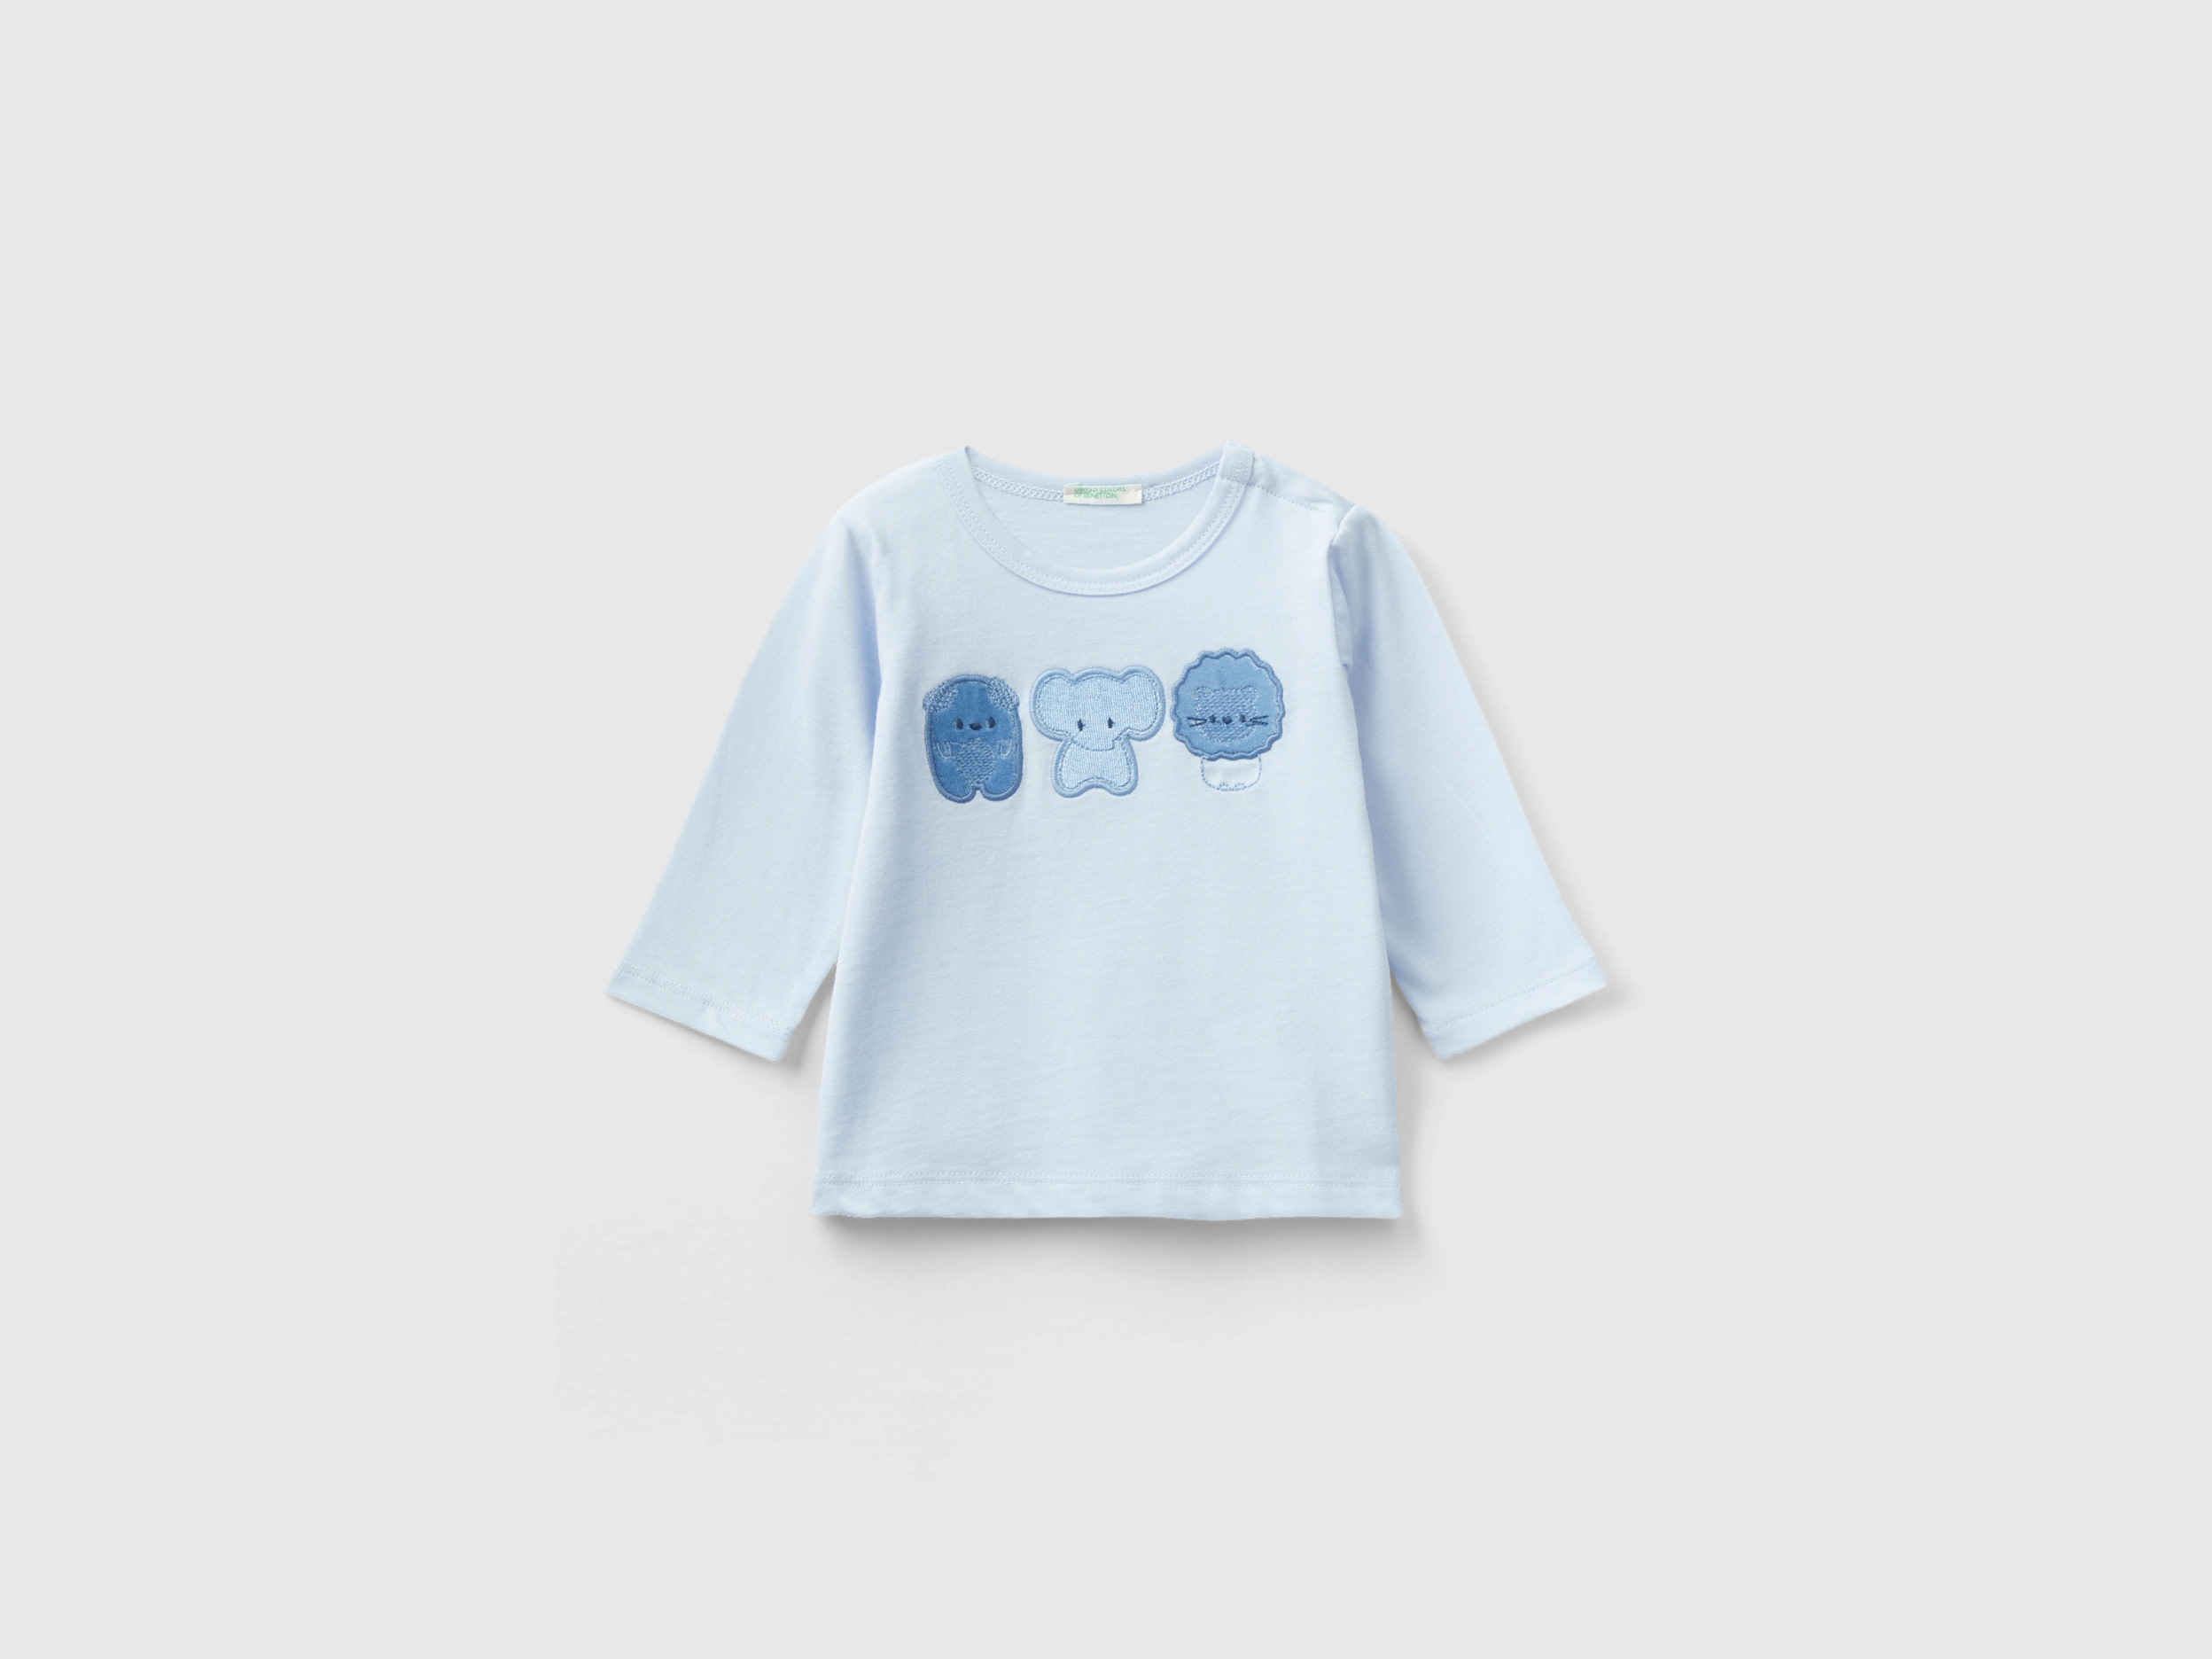 Benetton, T-shirt With Animal Print, size 3-6, Sky Blue, Kids